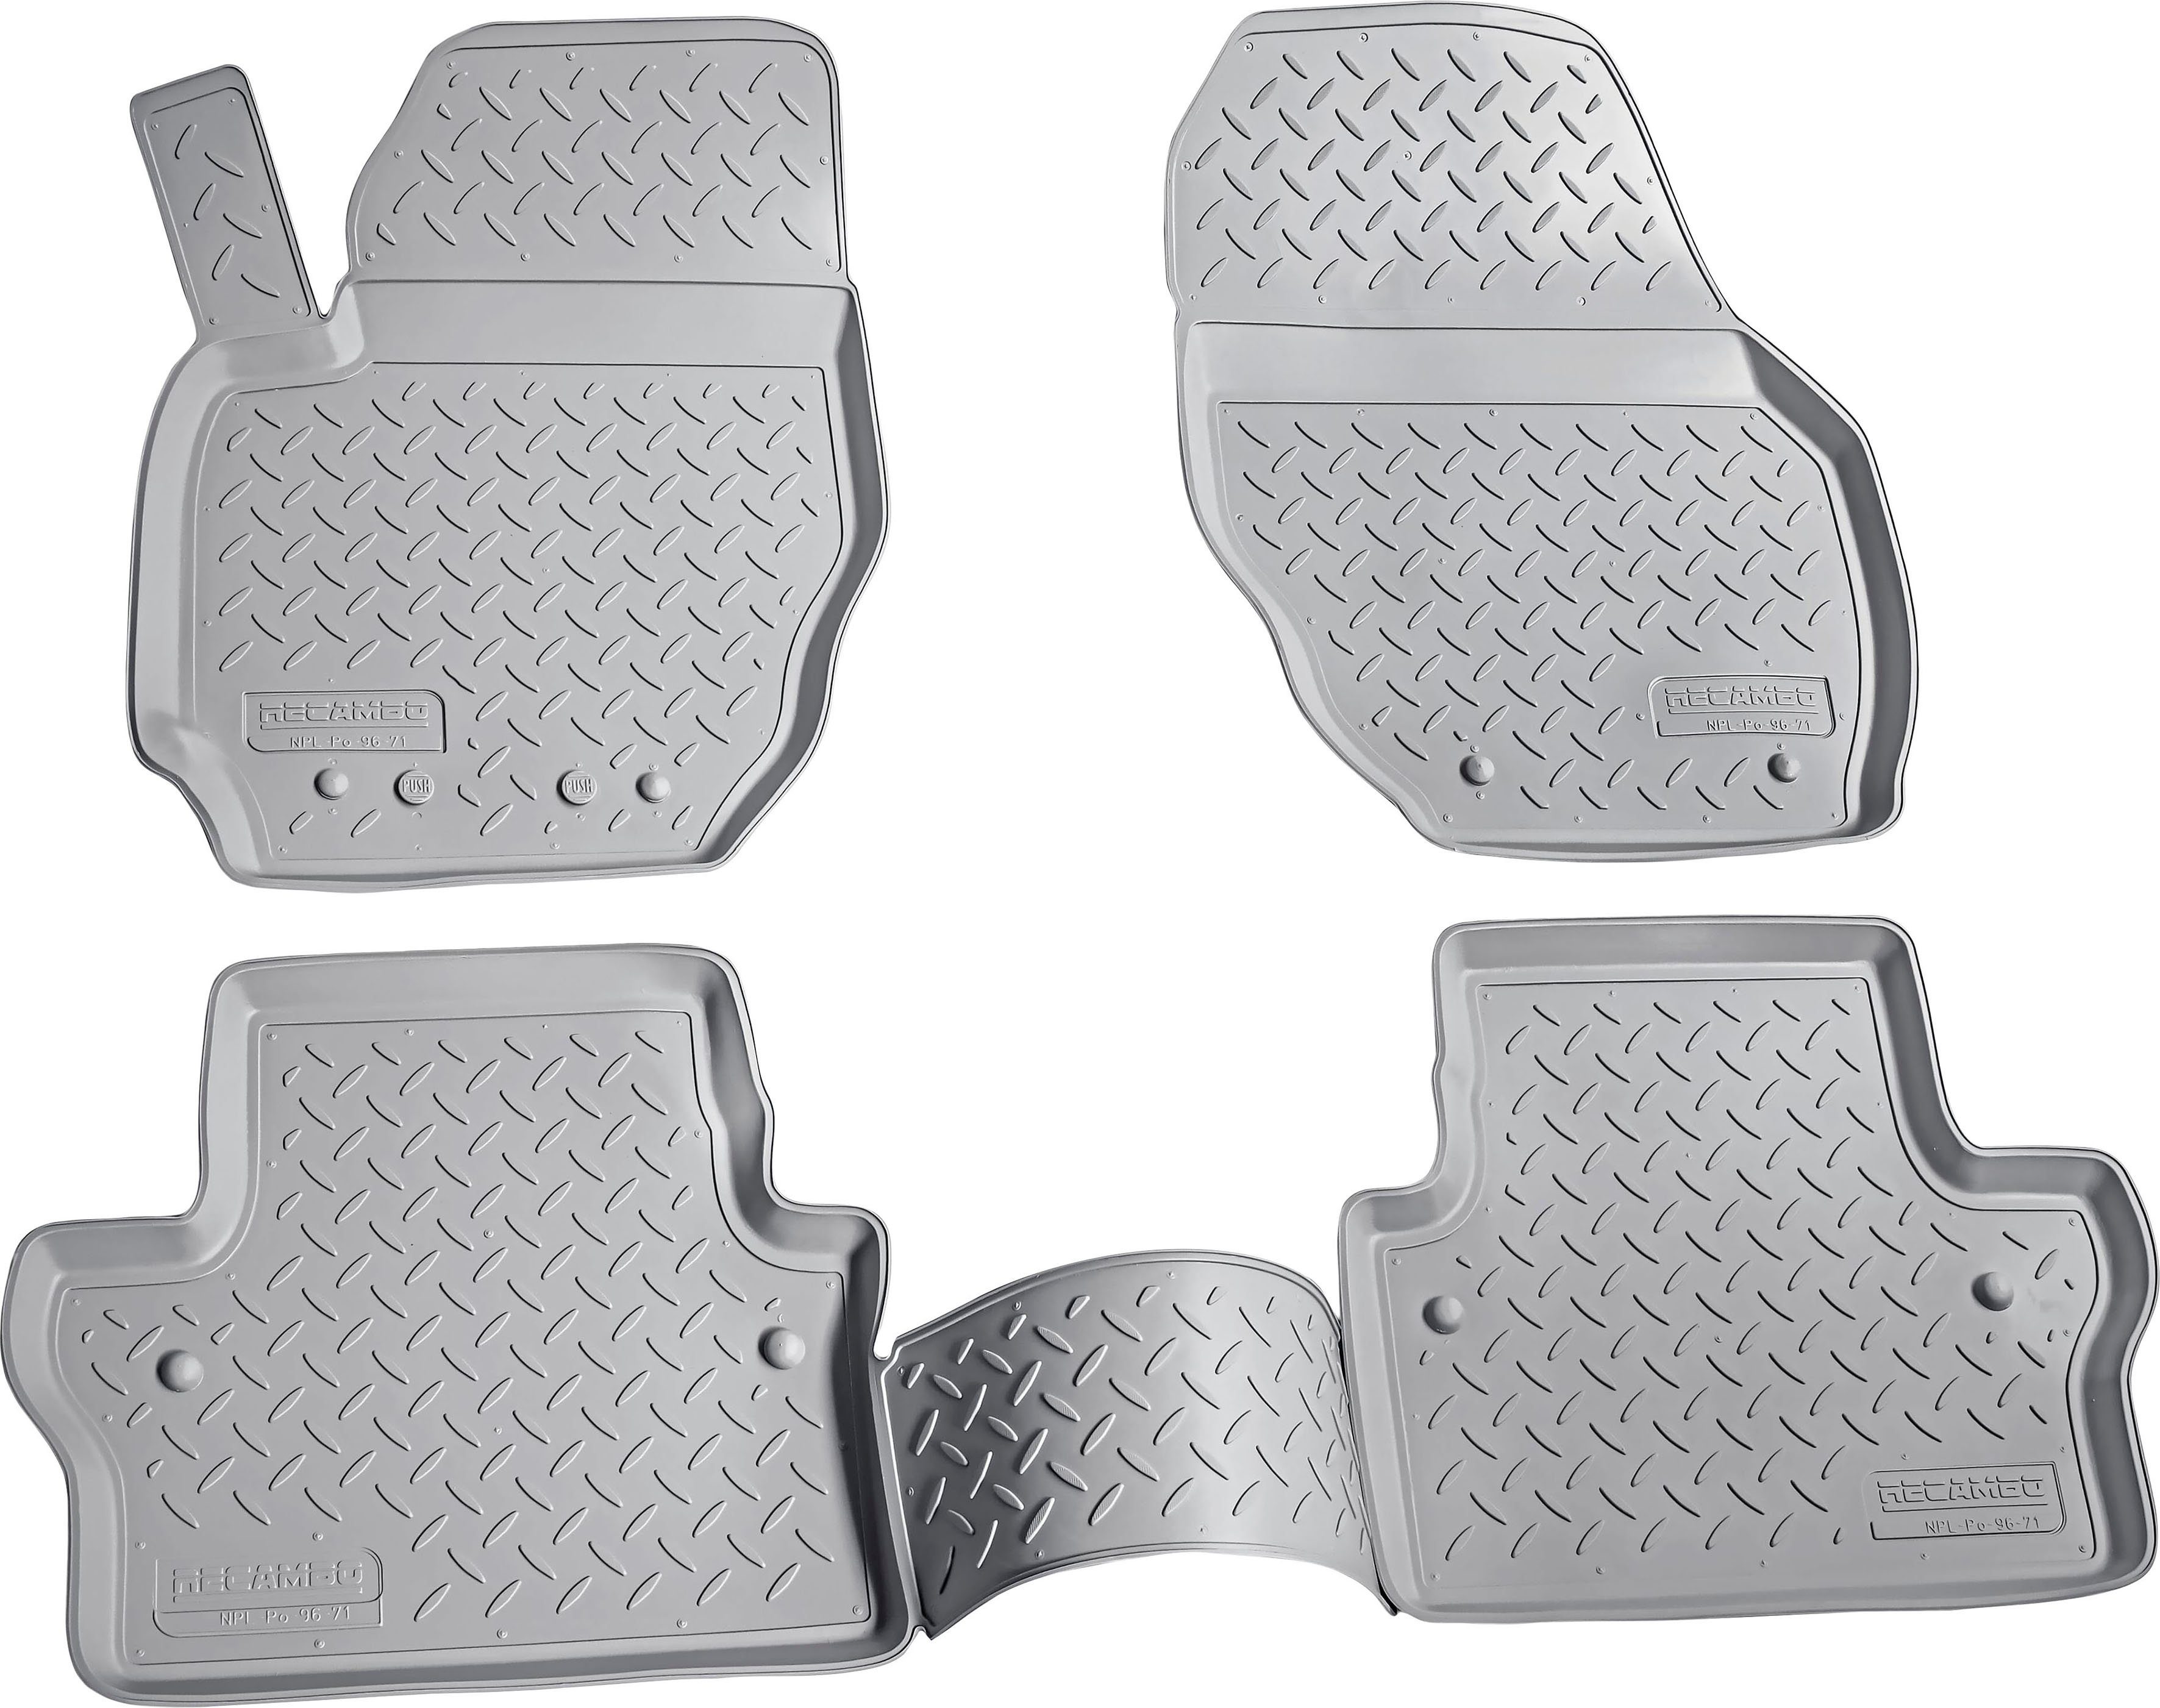 RECAMBO Passform-Fußmatten CustomComforts (4 St), für Volvo V70, XC70 2007 - 2016, perfekte Passform